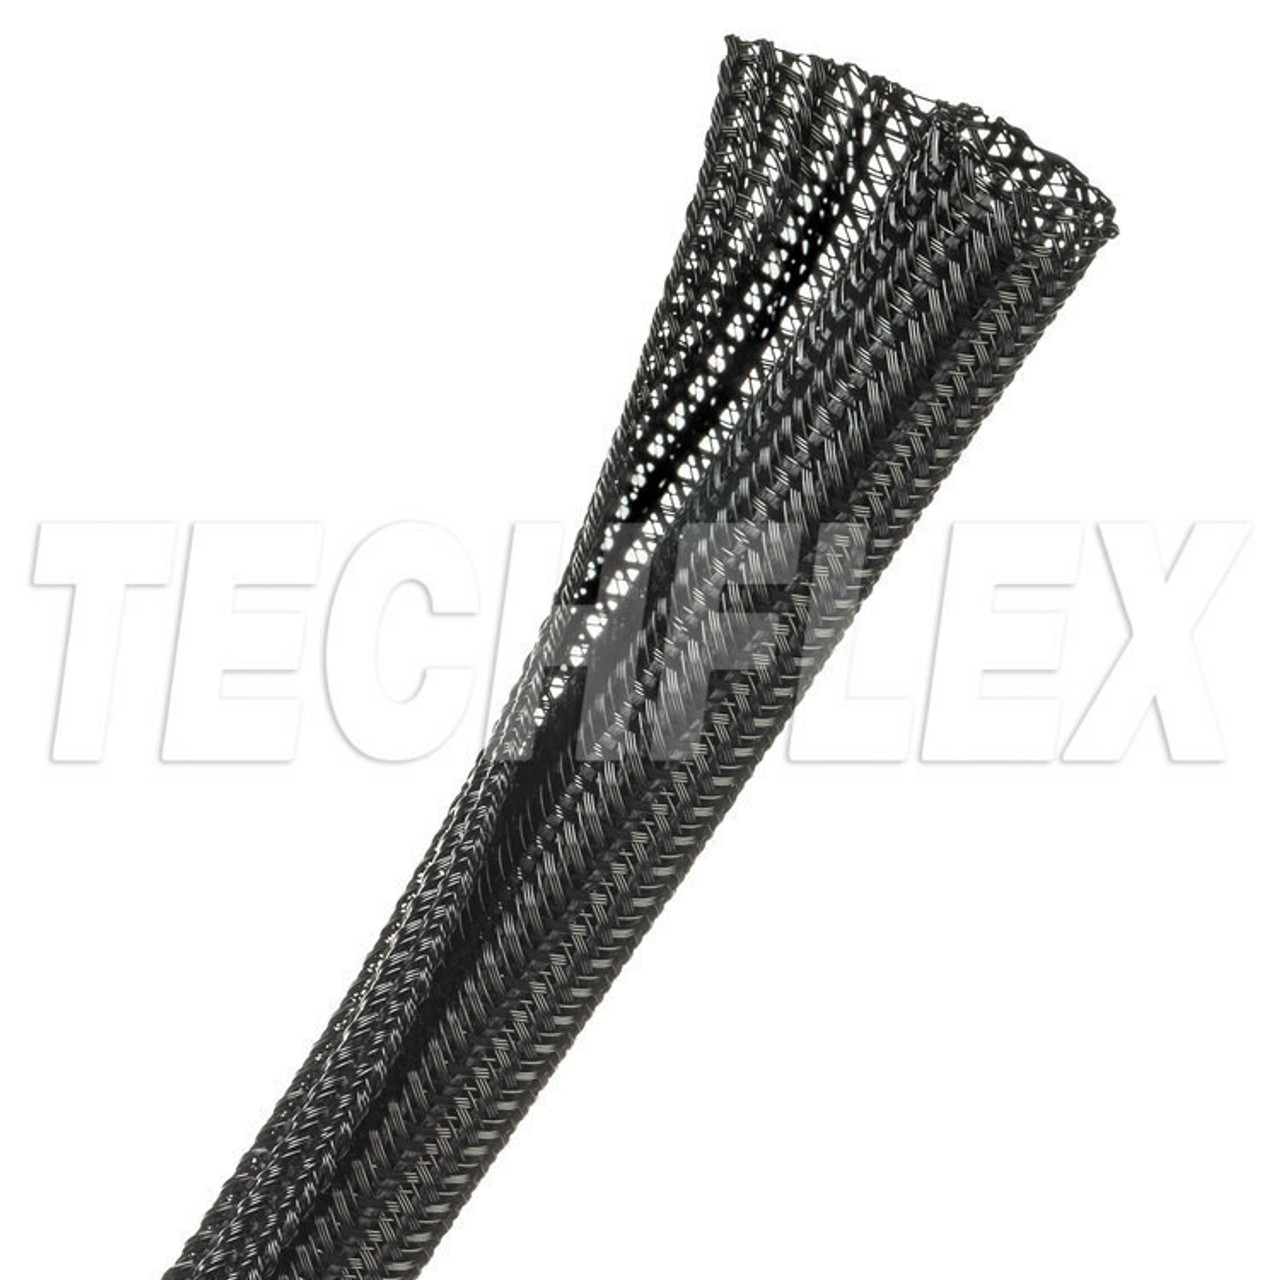 Techflex Flexo F6 Split Braid Sleeve, Black, 1/4 inch, 100ft/box -  Fastercable